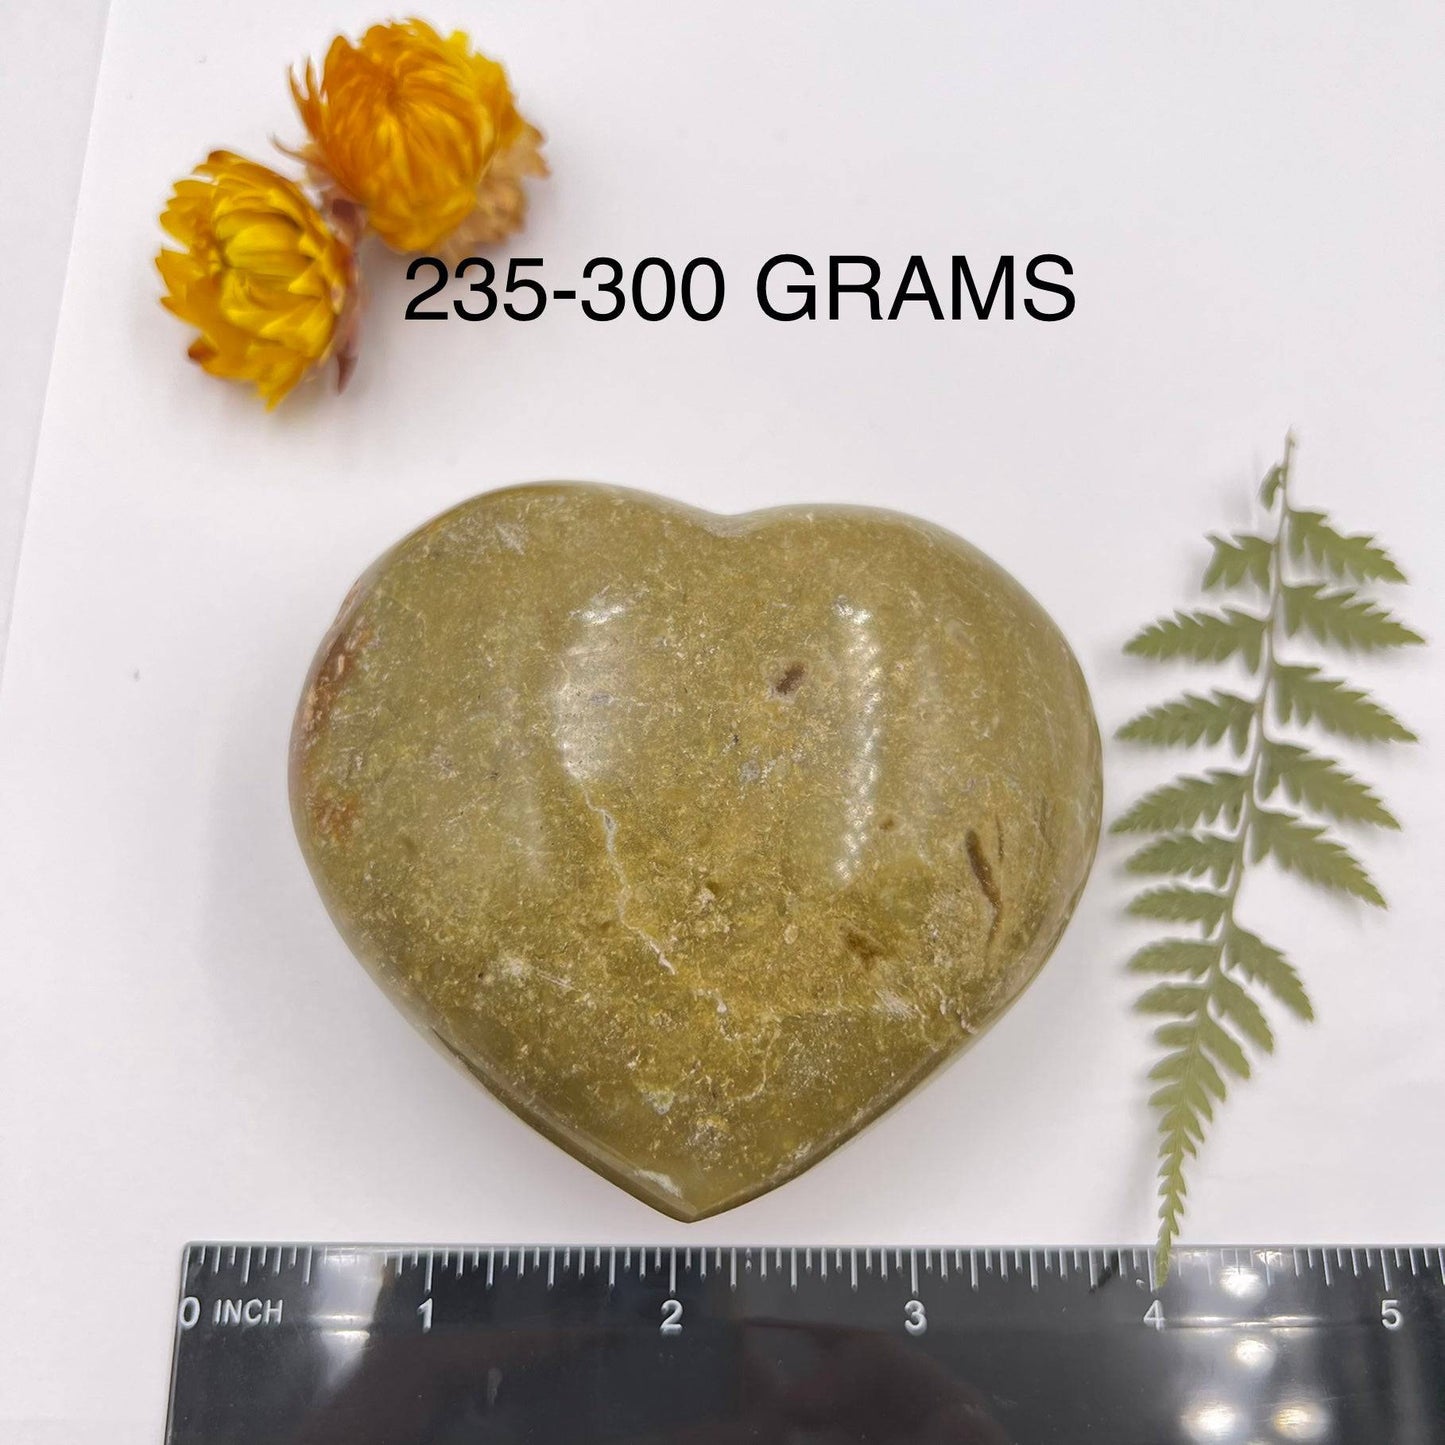 Green Opal Heart